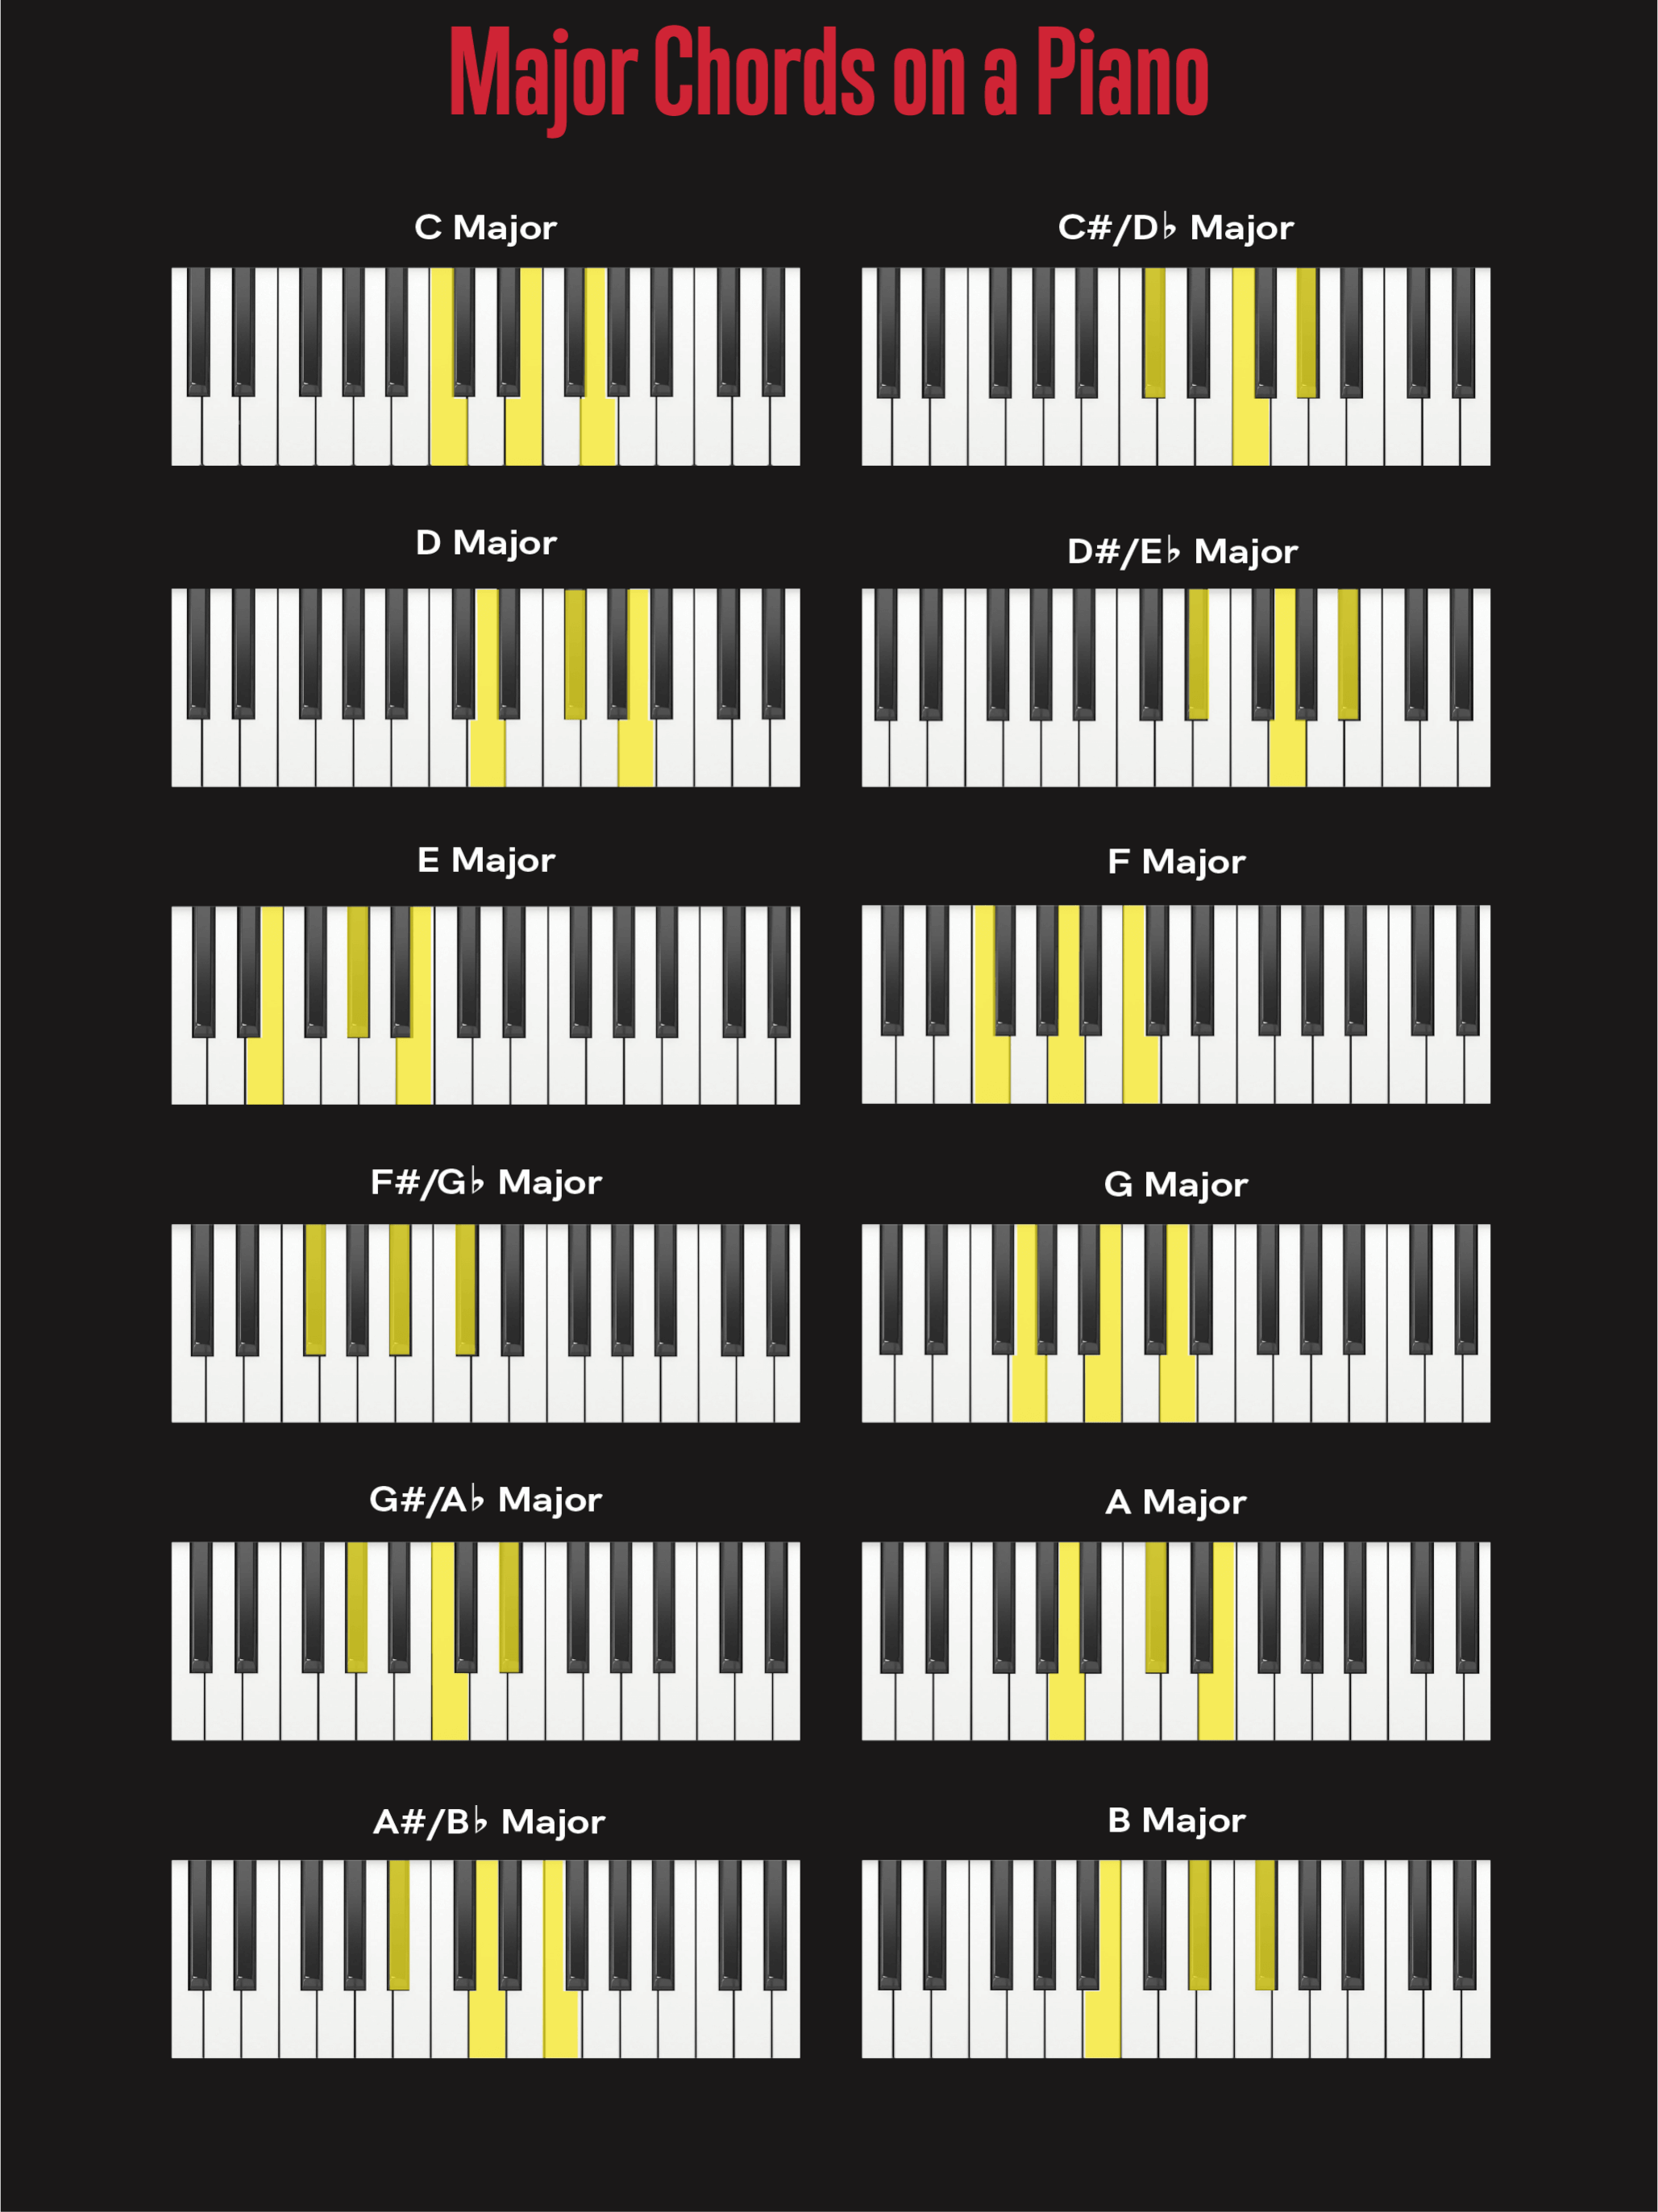 Major chord progressions on piano